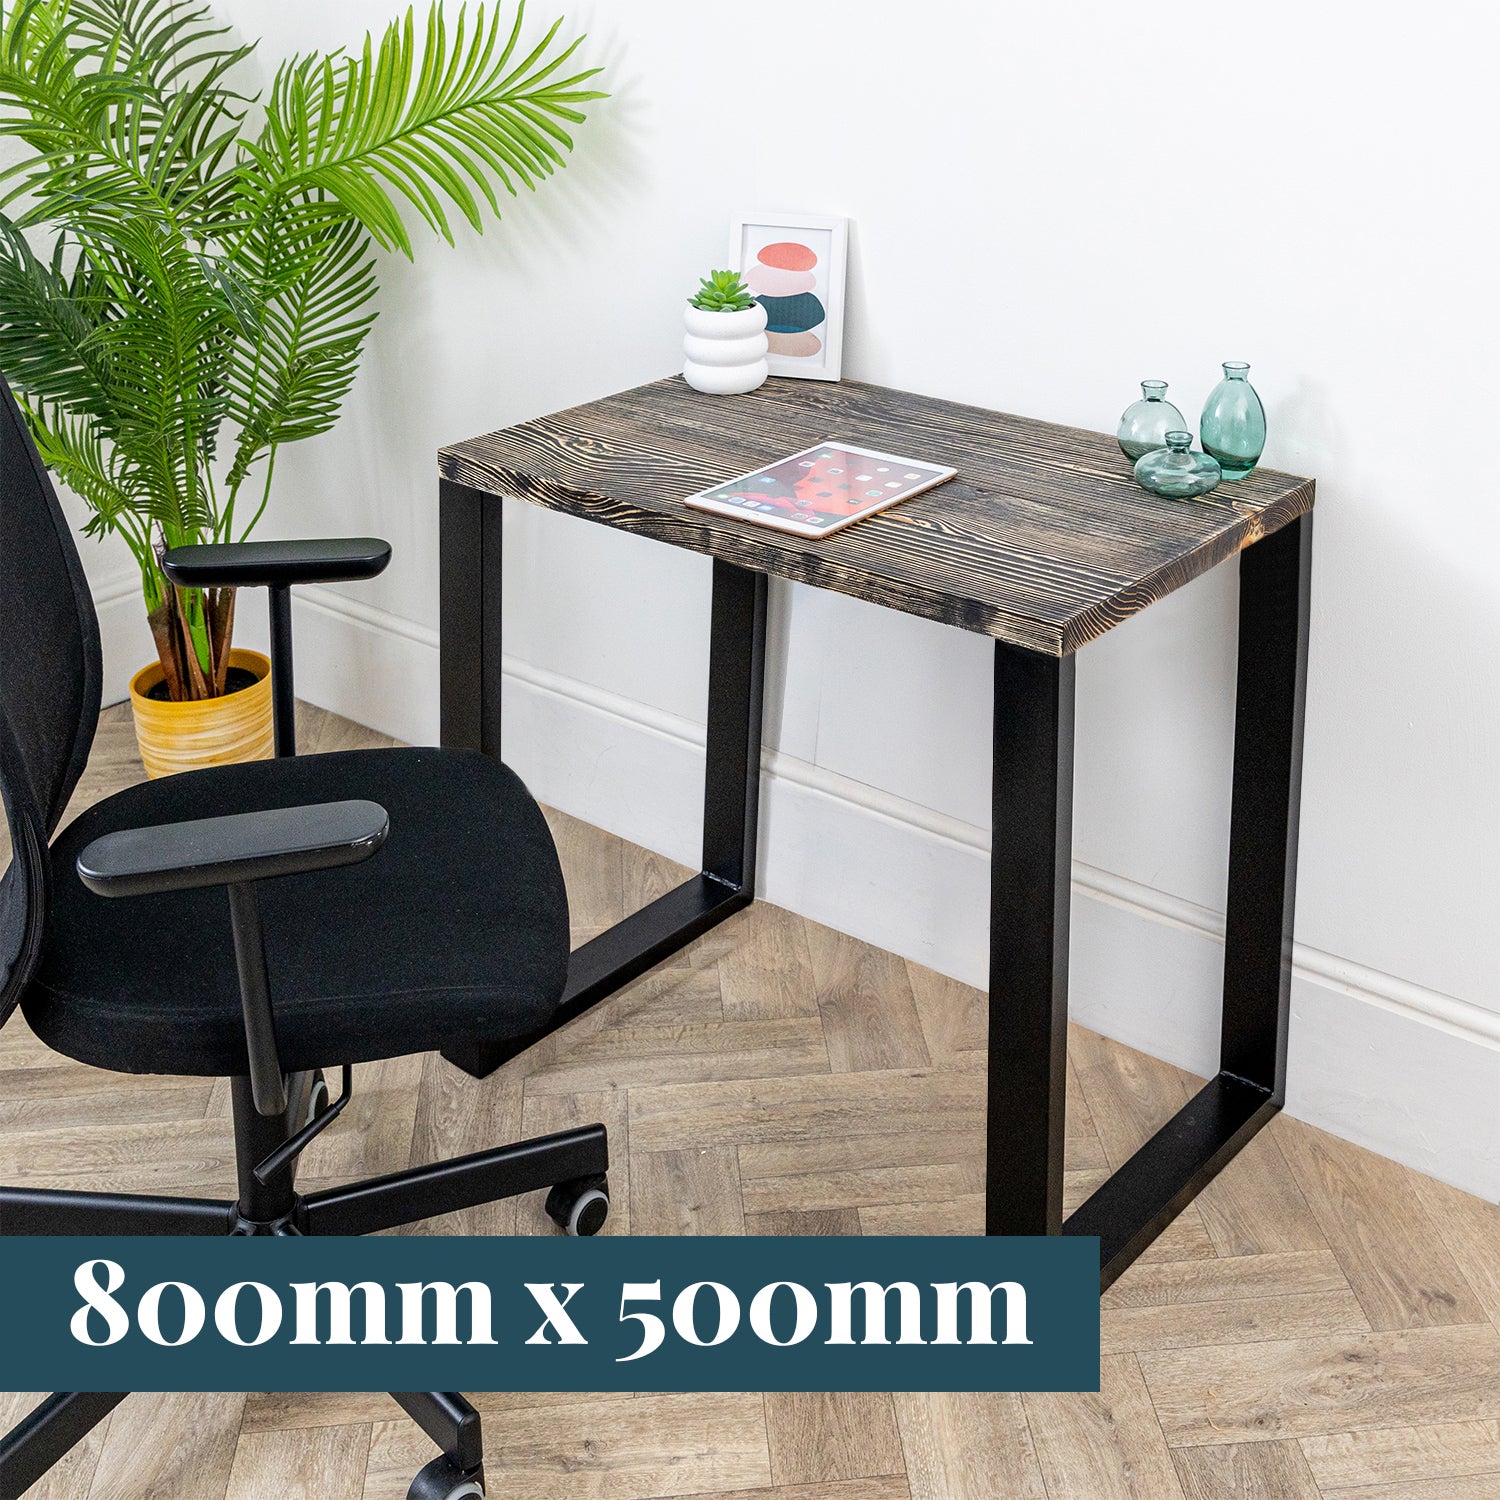 Dark Wood Desk with Square Metal Legs #length_800mm depth_500mm